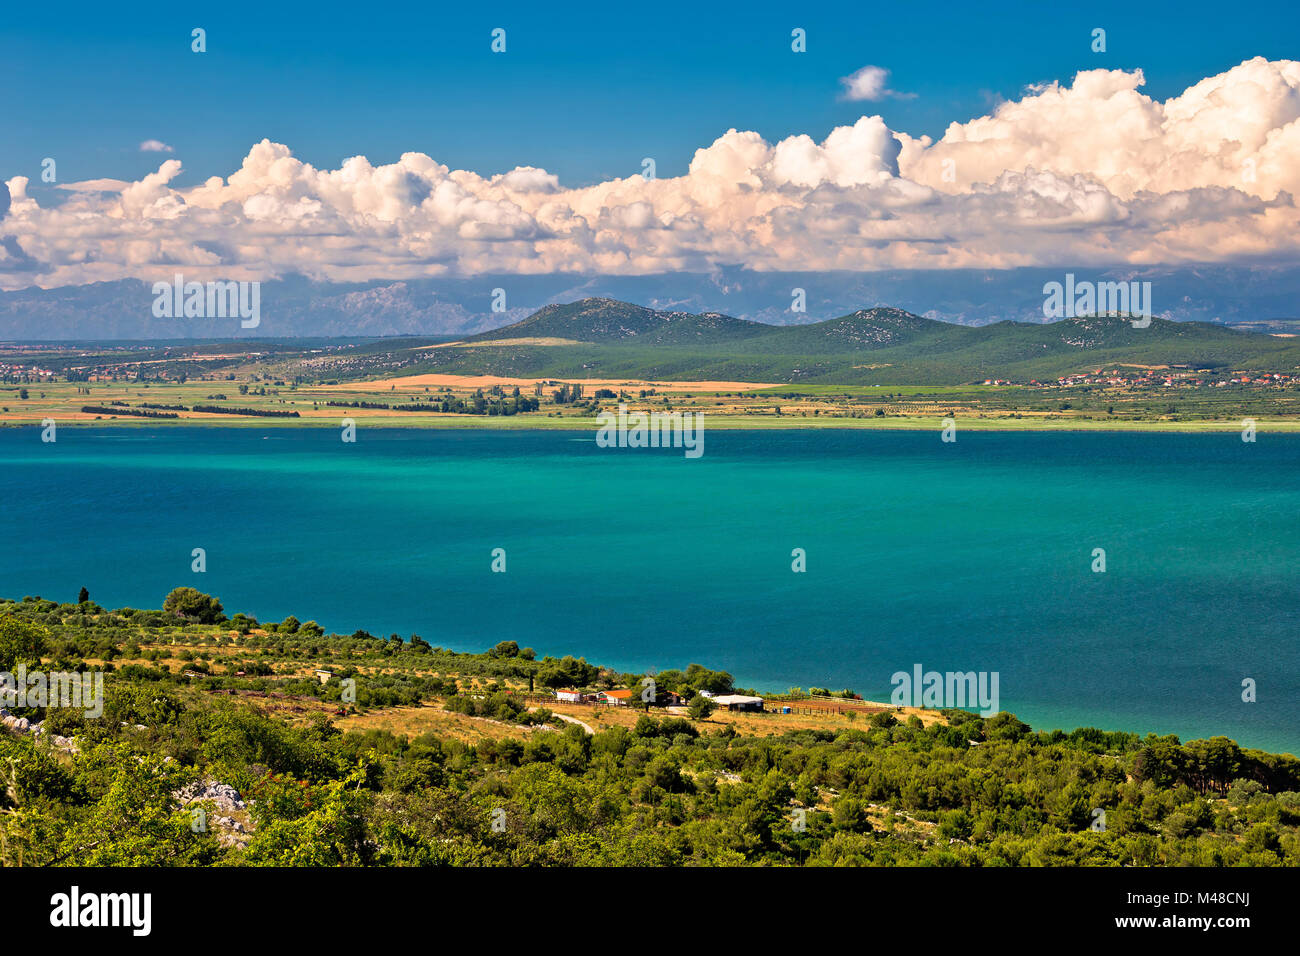 Vransko lake and landscape aerial view Stock Photo